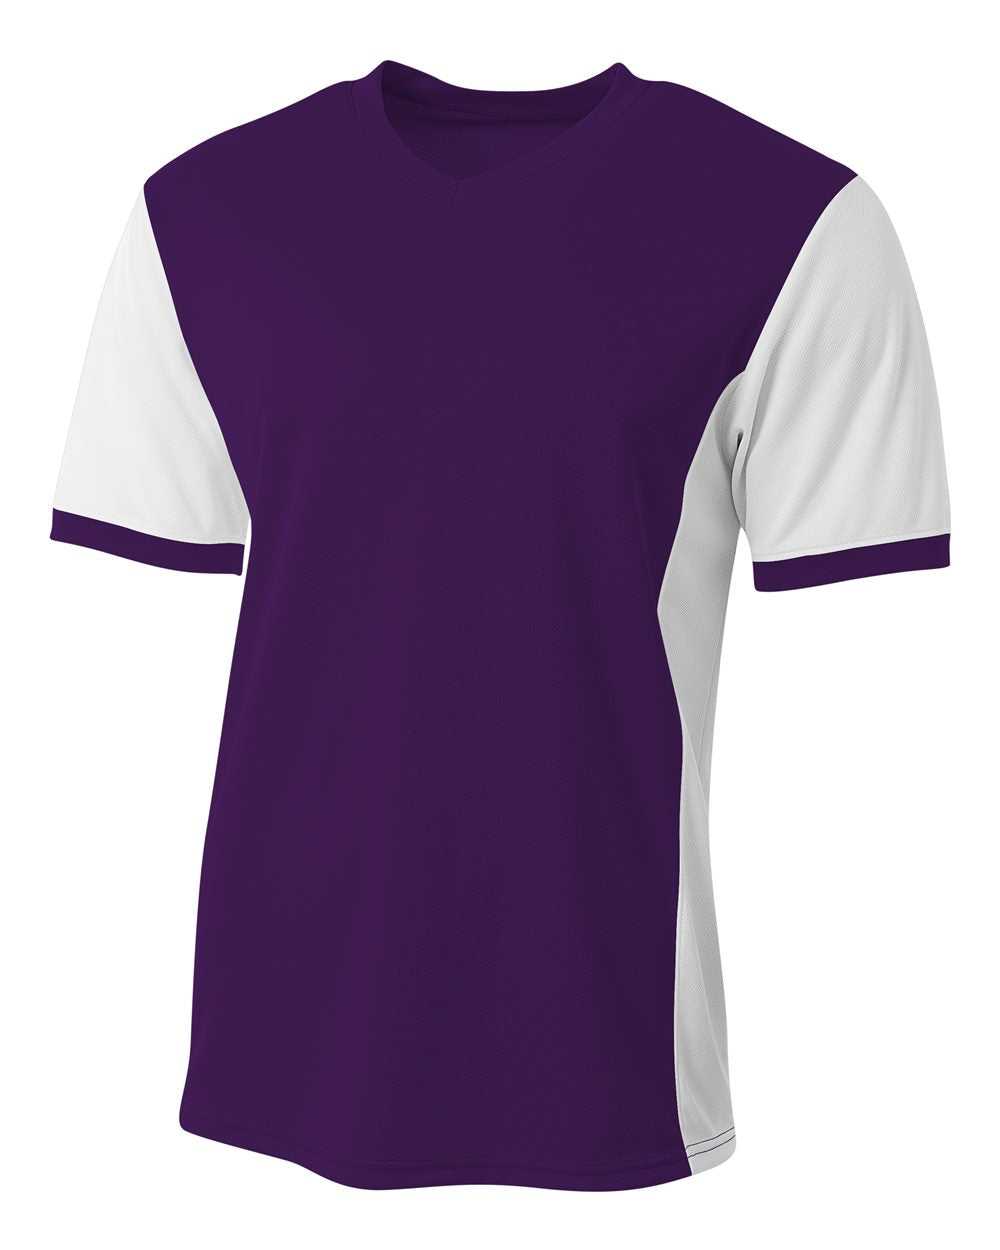 A4 N3017 Premier Soccer Jersey - Purple White - HIT a Double